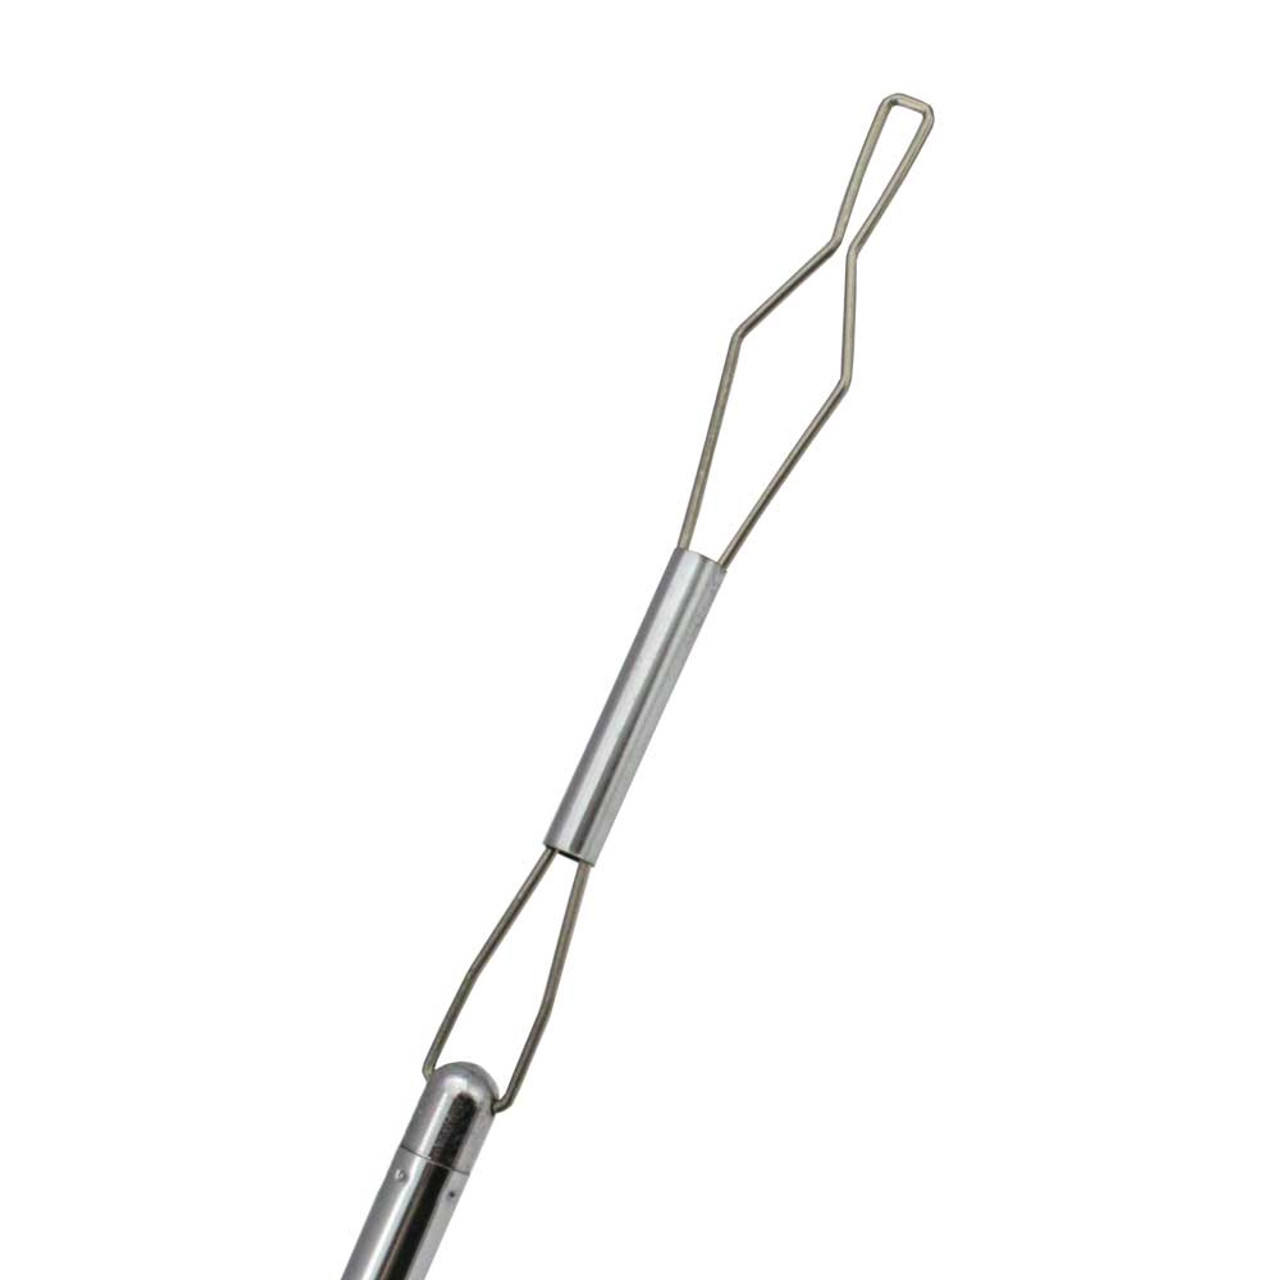 EZ-hook 3-in-1 fastener, jewelry tool, ez-hook, fastener tool, fastening  bracelets, fastening necklace